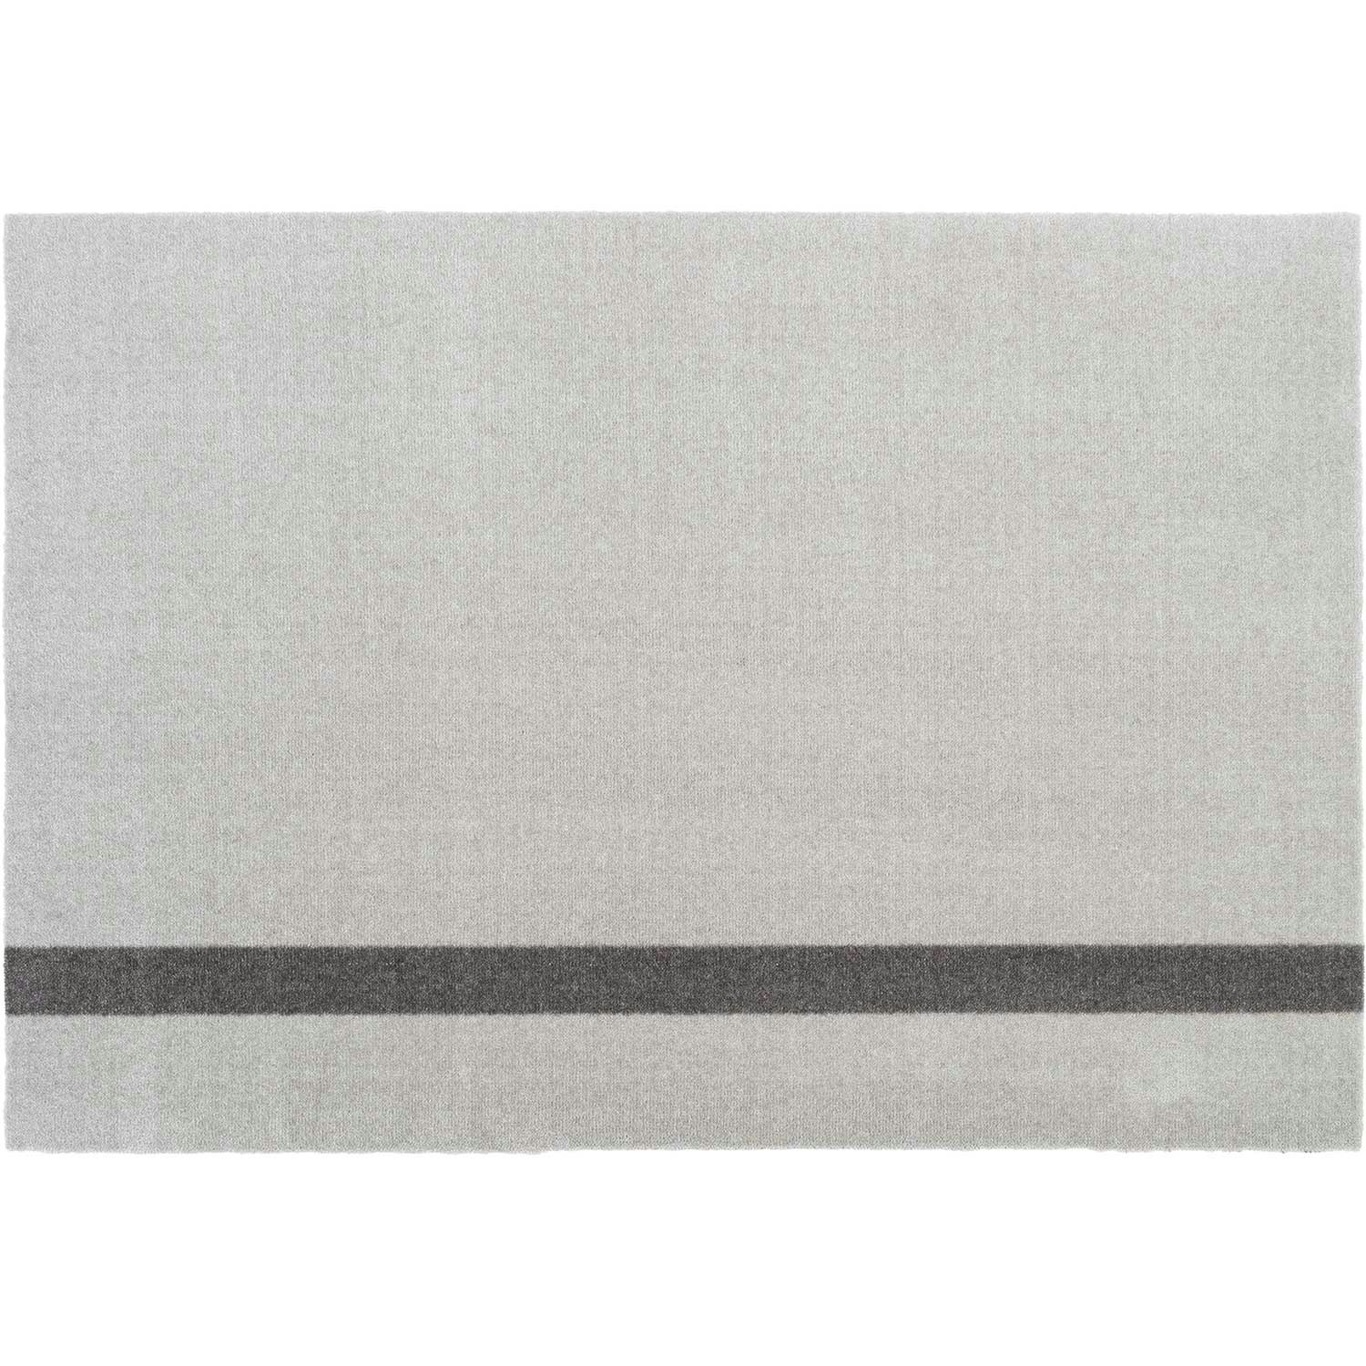 Stripes Vertikal Tæppe Lysegråt / Steel Grey, 90x130 cm